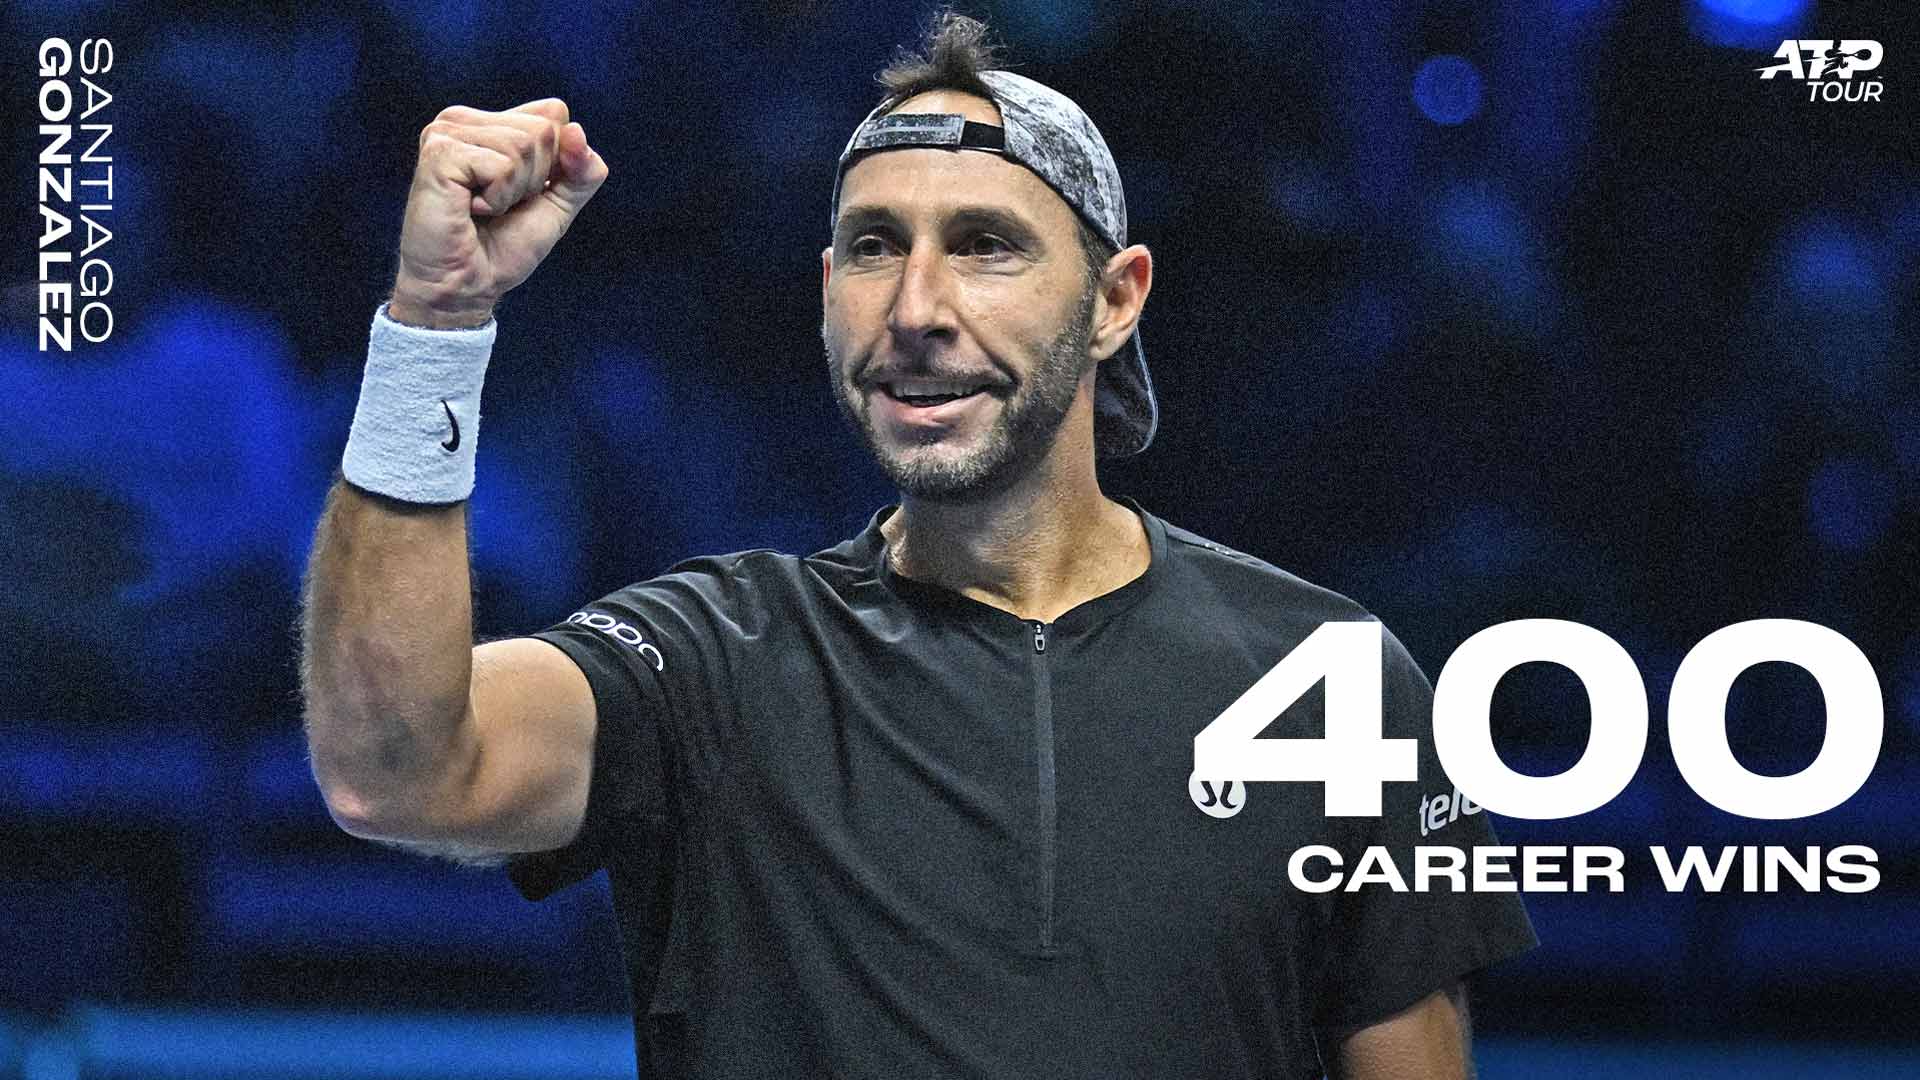 '400 is quite a lot!' Santiago Gonzalez hits wins milestone in Barcelona